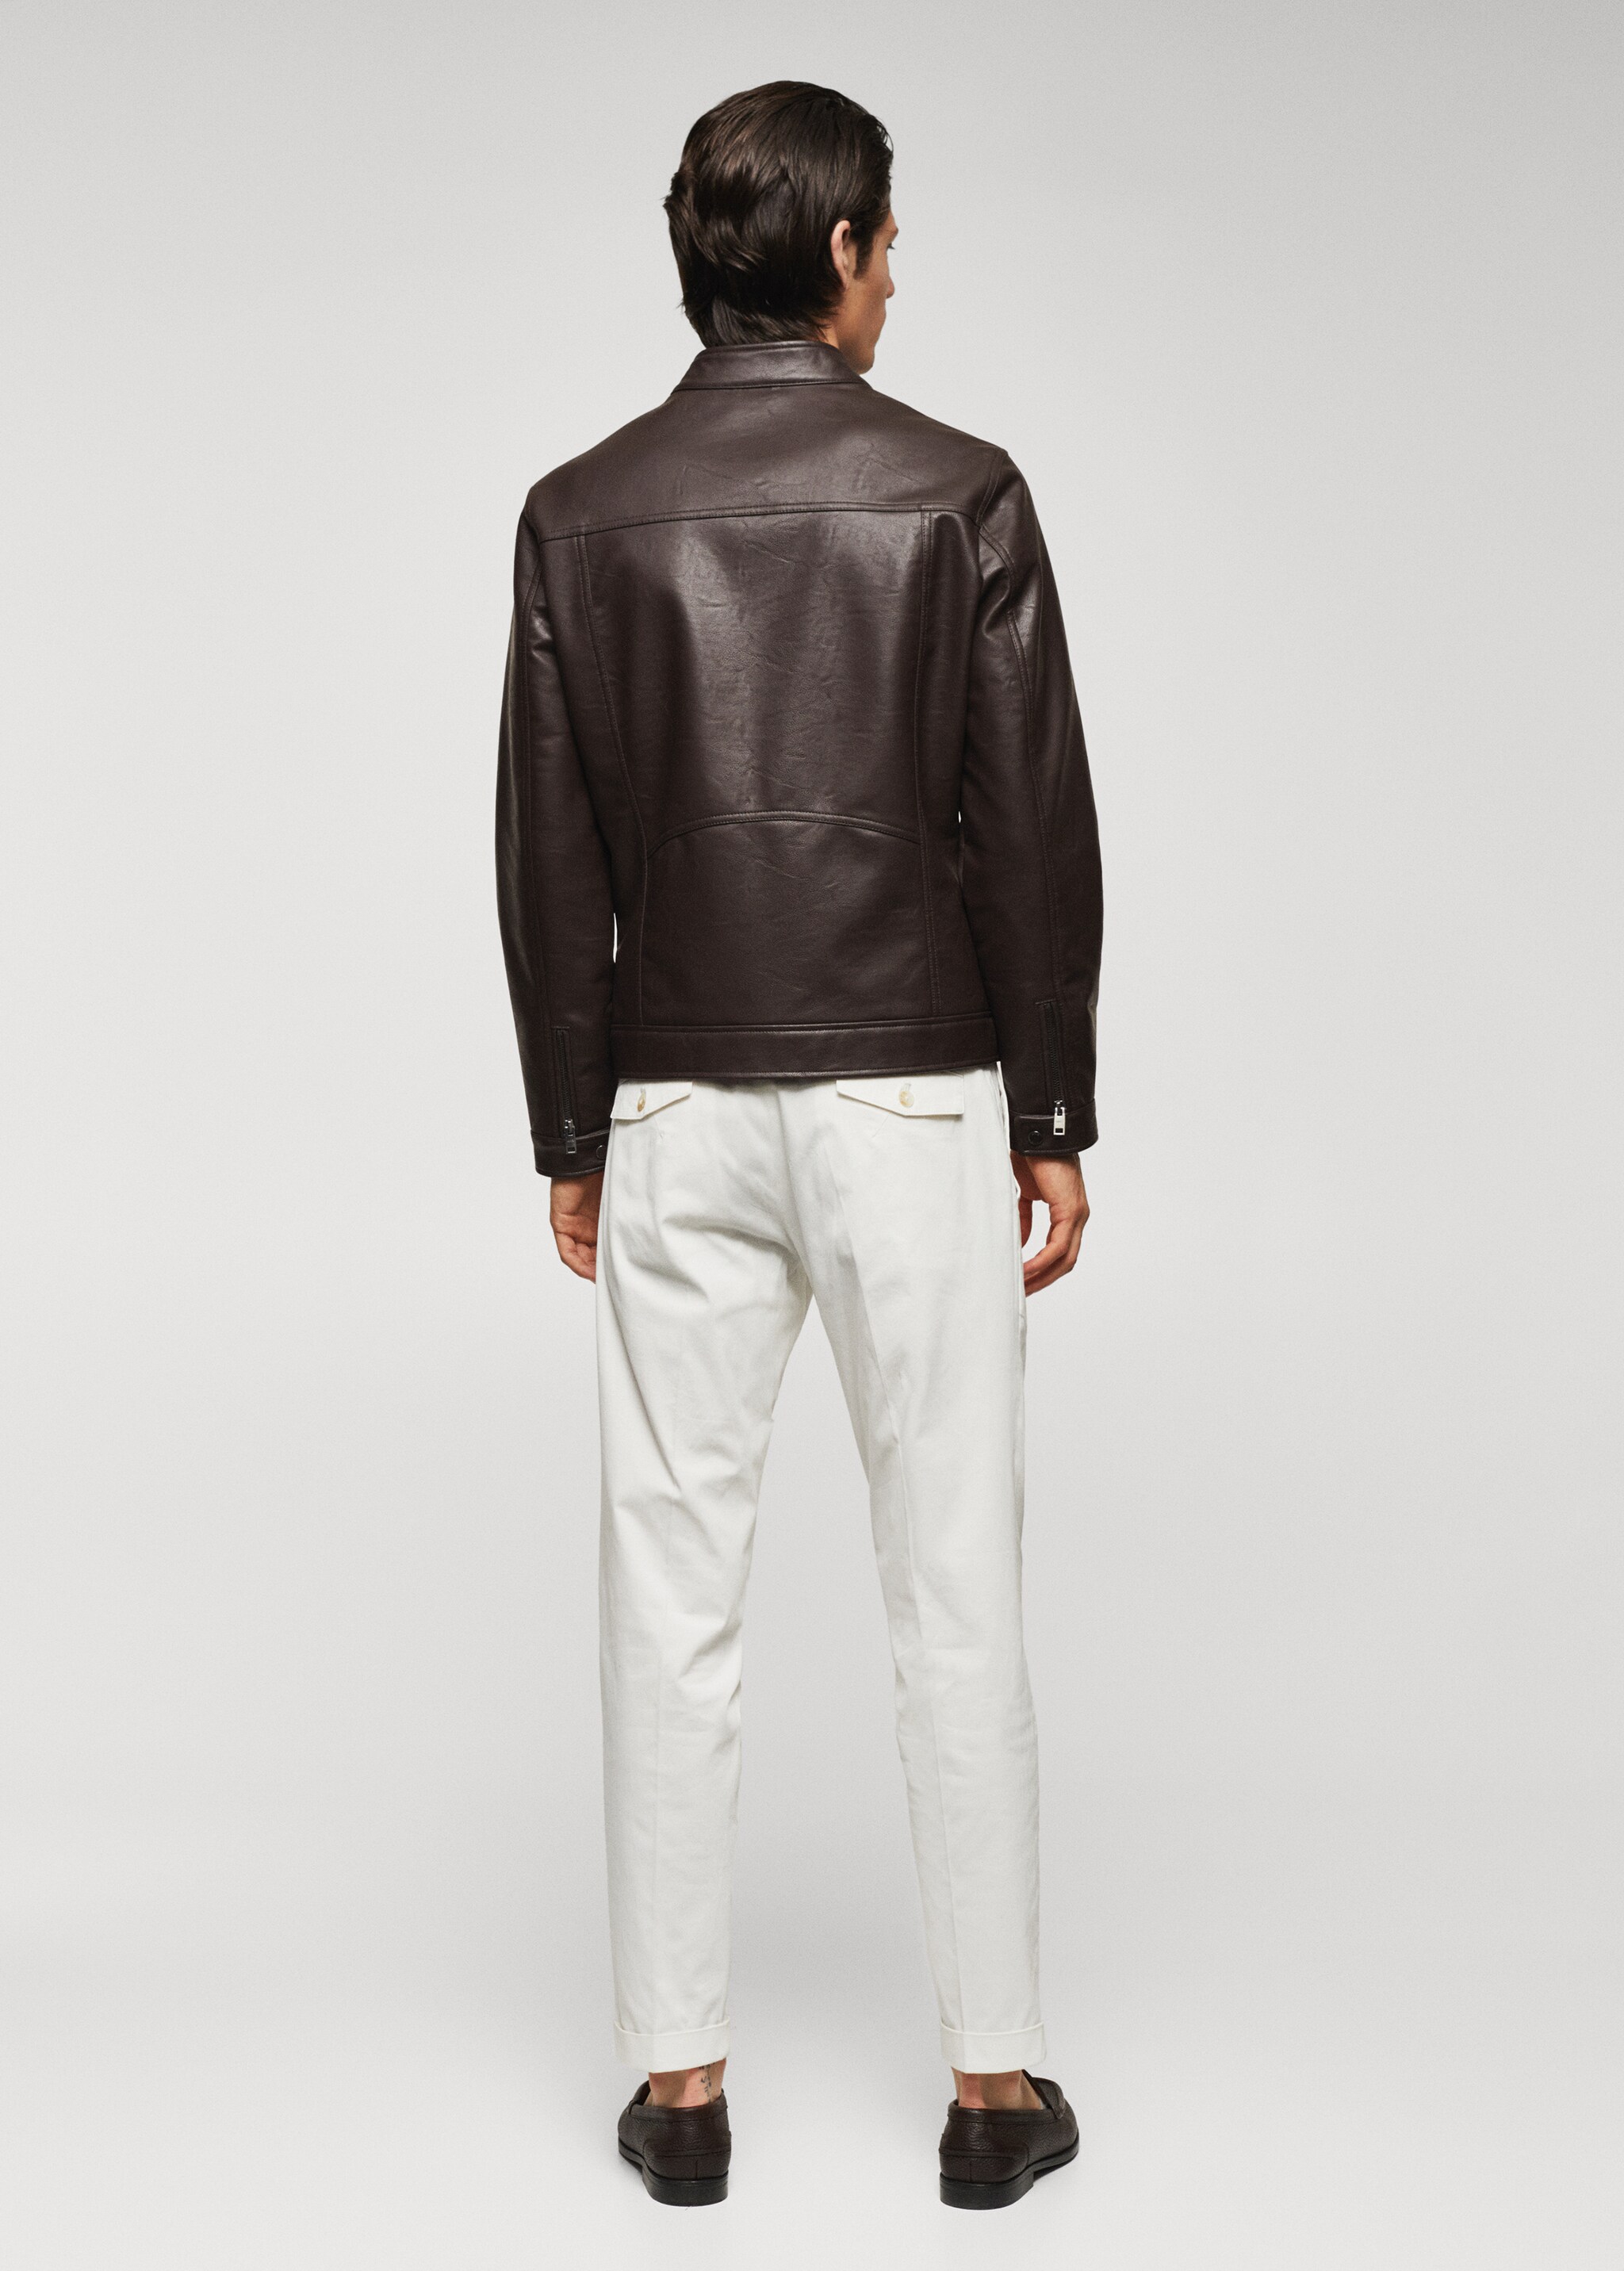 Zipper-Jacke mit Leder-Effekt - Rückseite des Artikels